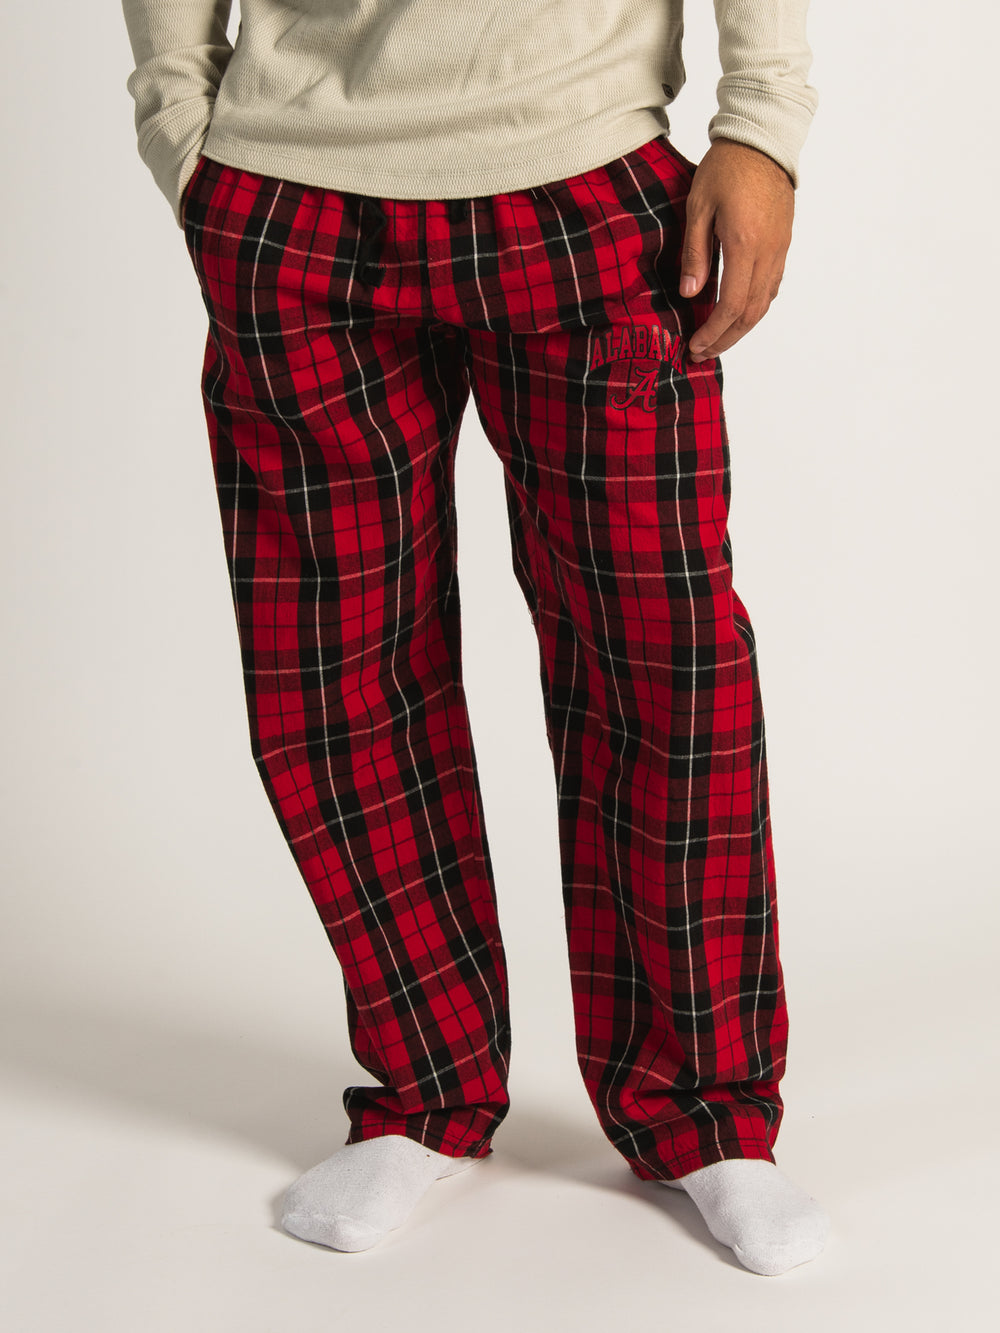 Penn State University Women's Flannel Pajamas Plaid PJ Bottoms